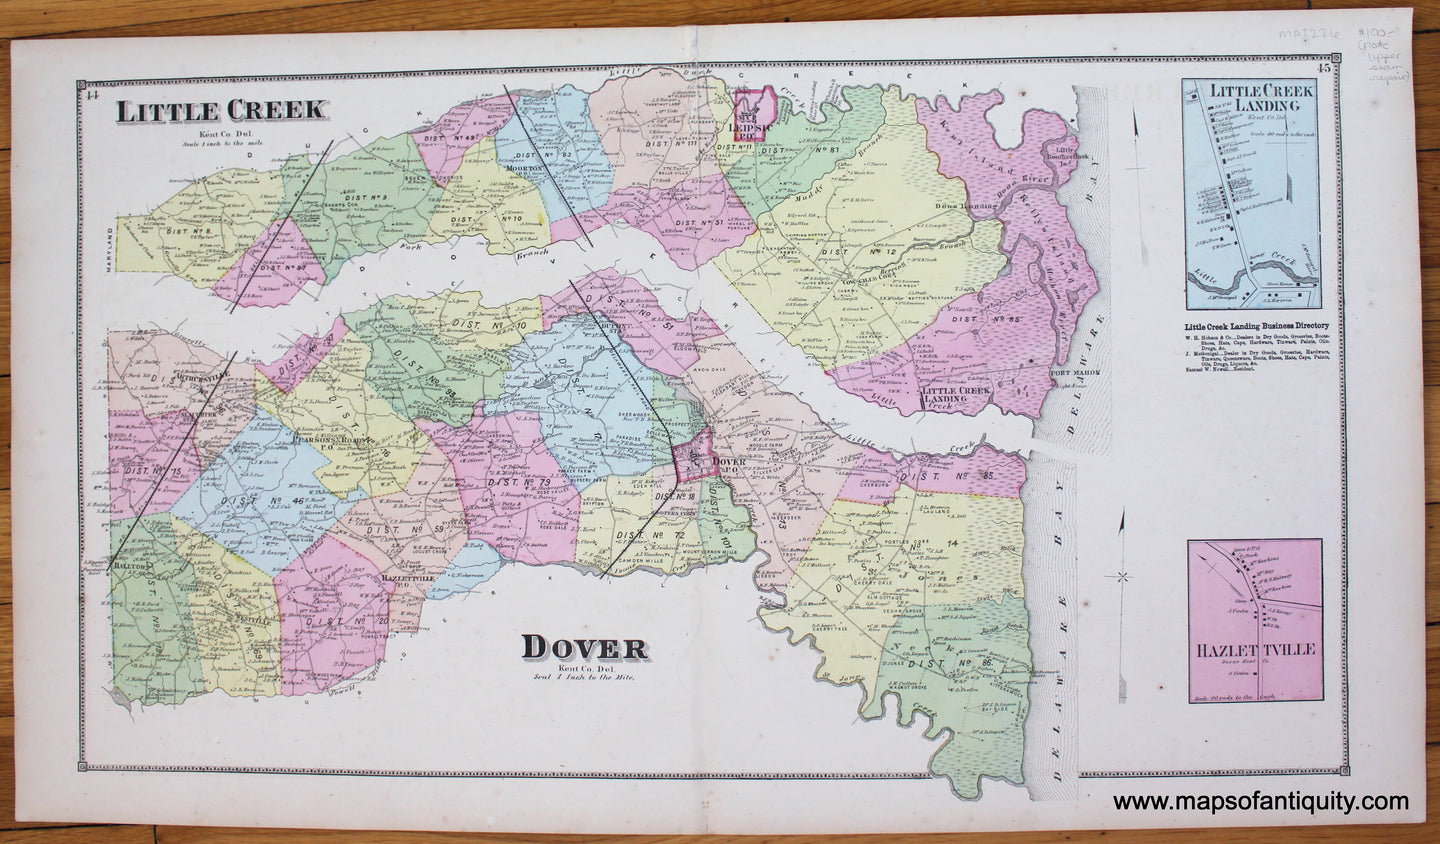 Little-Creek-Kent-Co.-Del.-Dover-Kent-Co.-Del.-Little-Creek-Landing-Kent-Co.-Del.-Hazlettville-Dover-Kent-Co.-Antique-Map-1868-Beers-1860s-1800s-19th-century-Maps-of-Antiquity